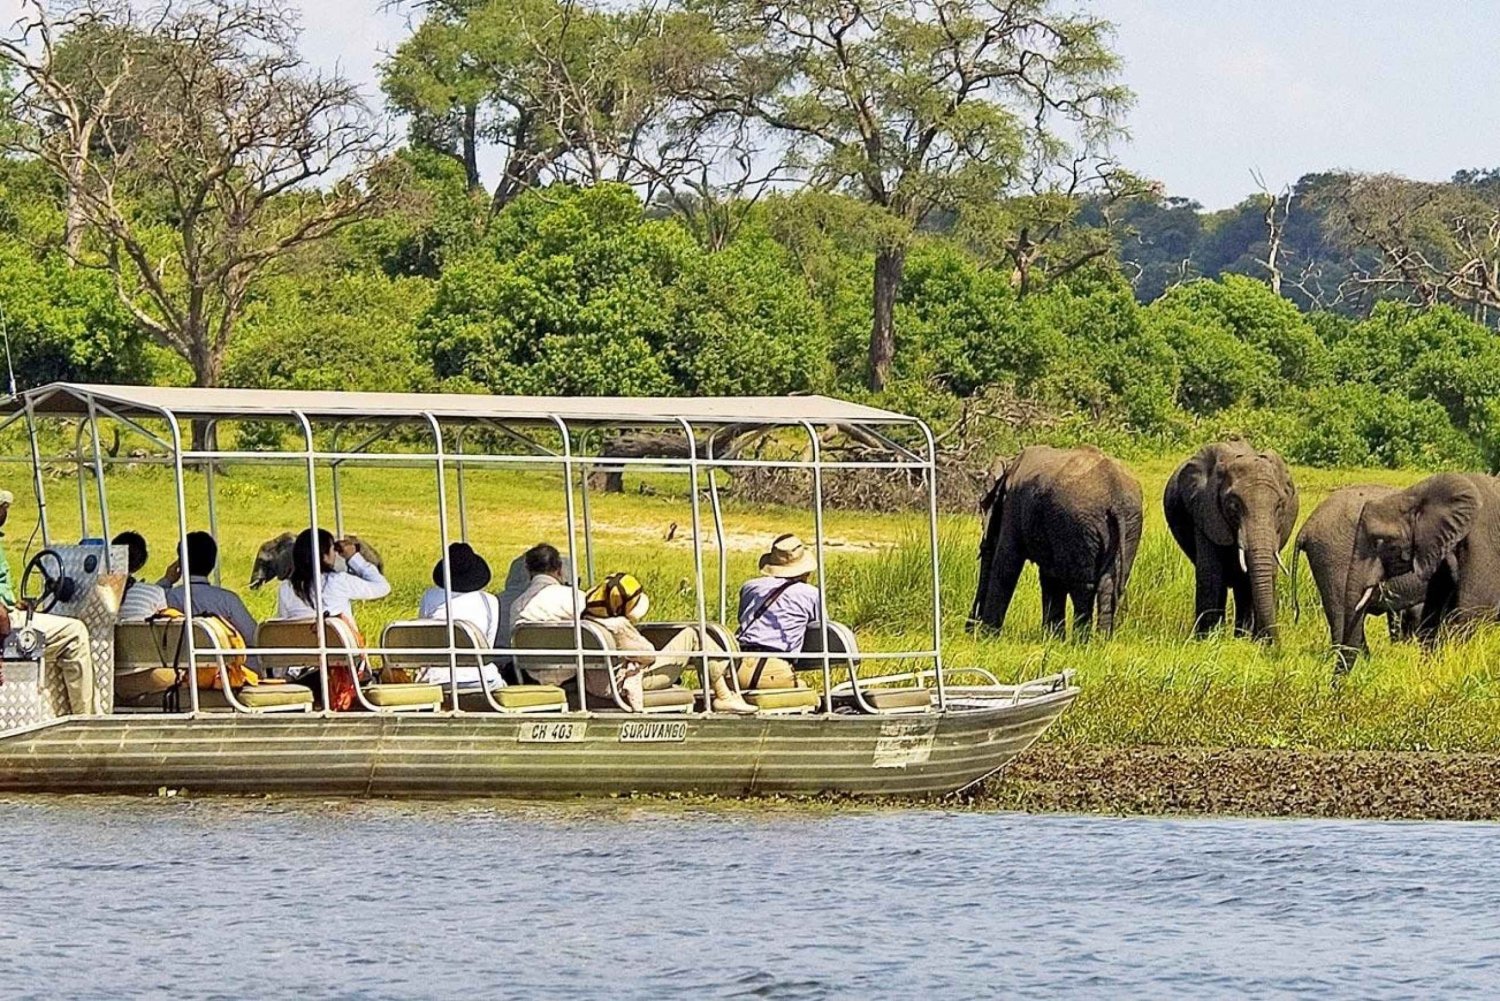 Livingstone: Chobe National Park Safari with Lunch